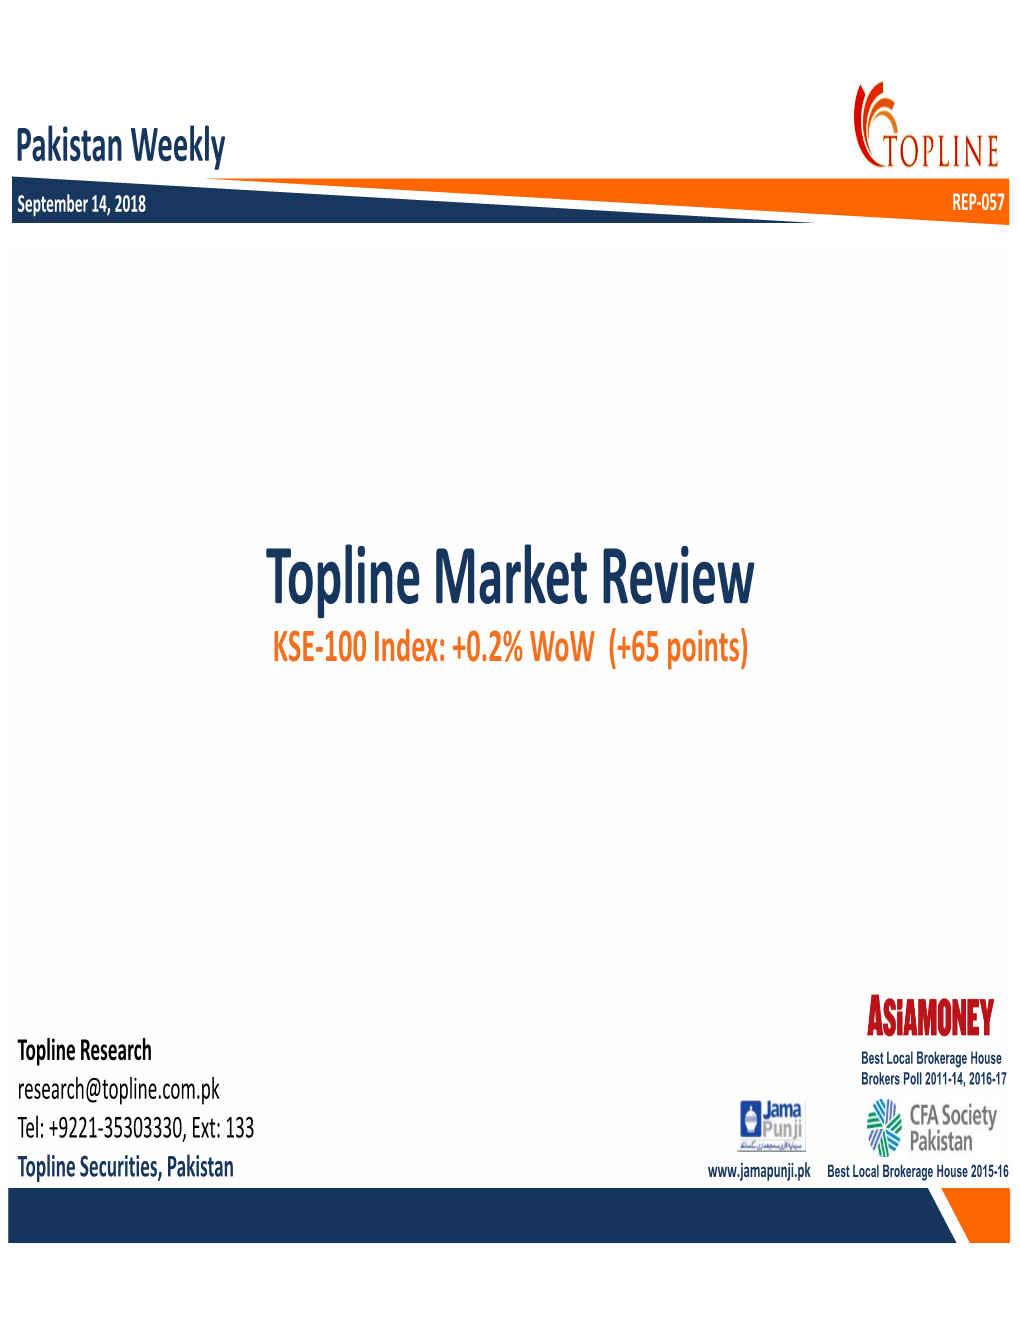 Topline Market Weekly Review